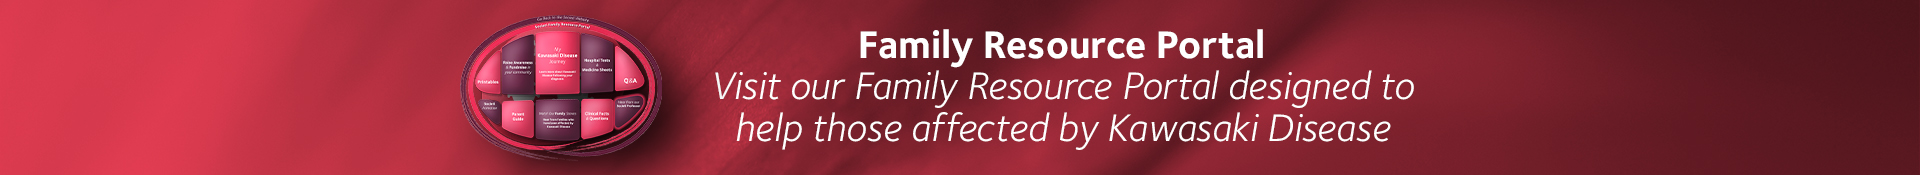 Family Resource Portal